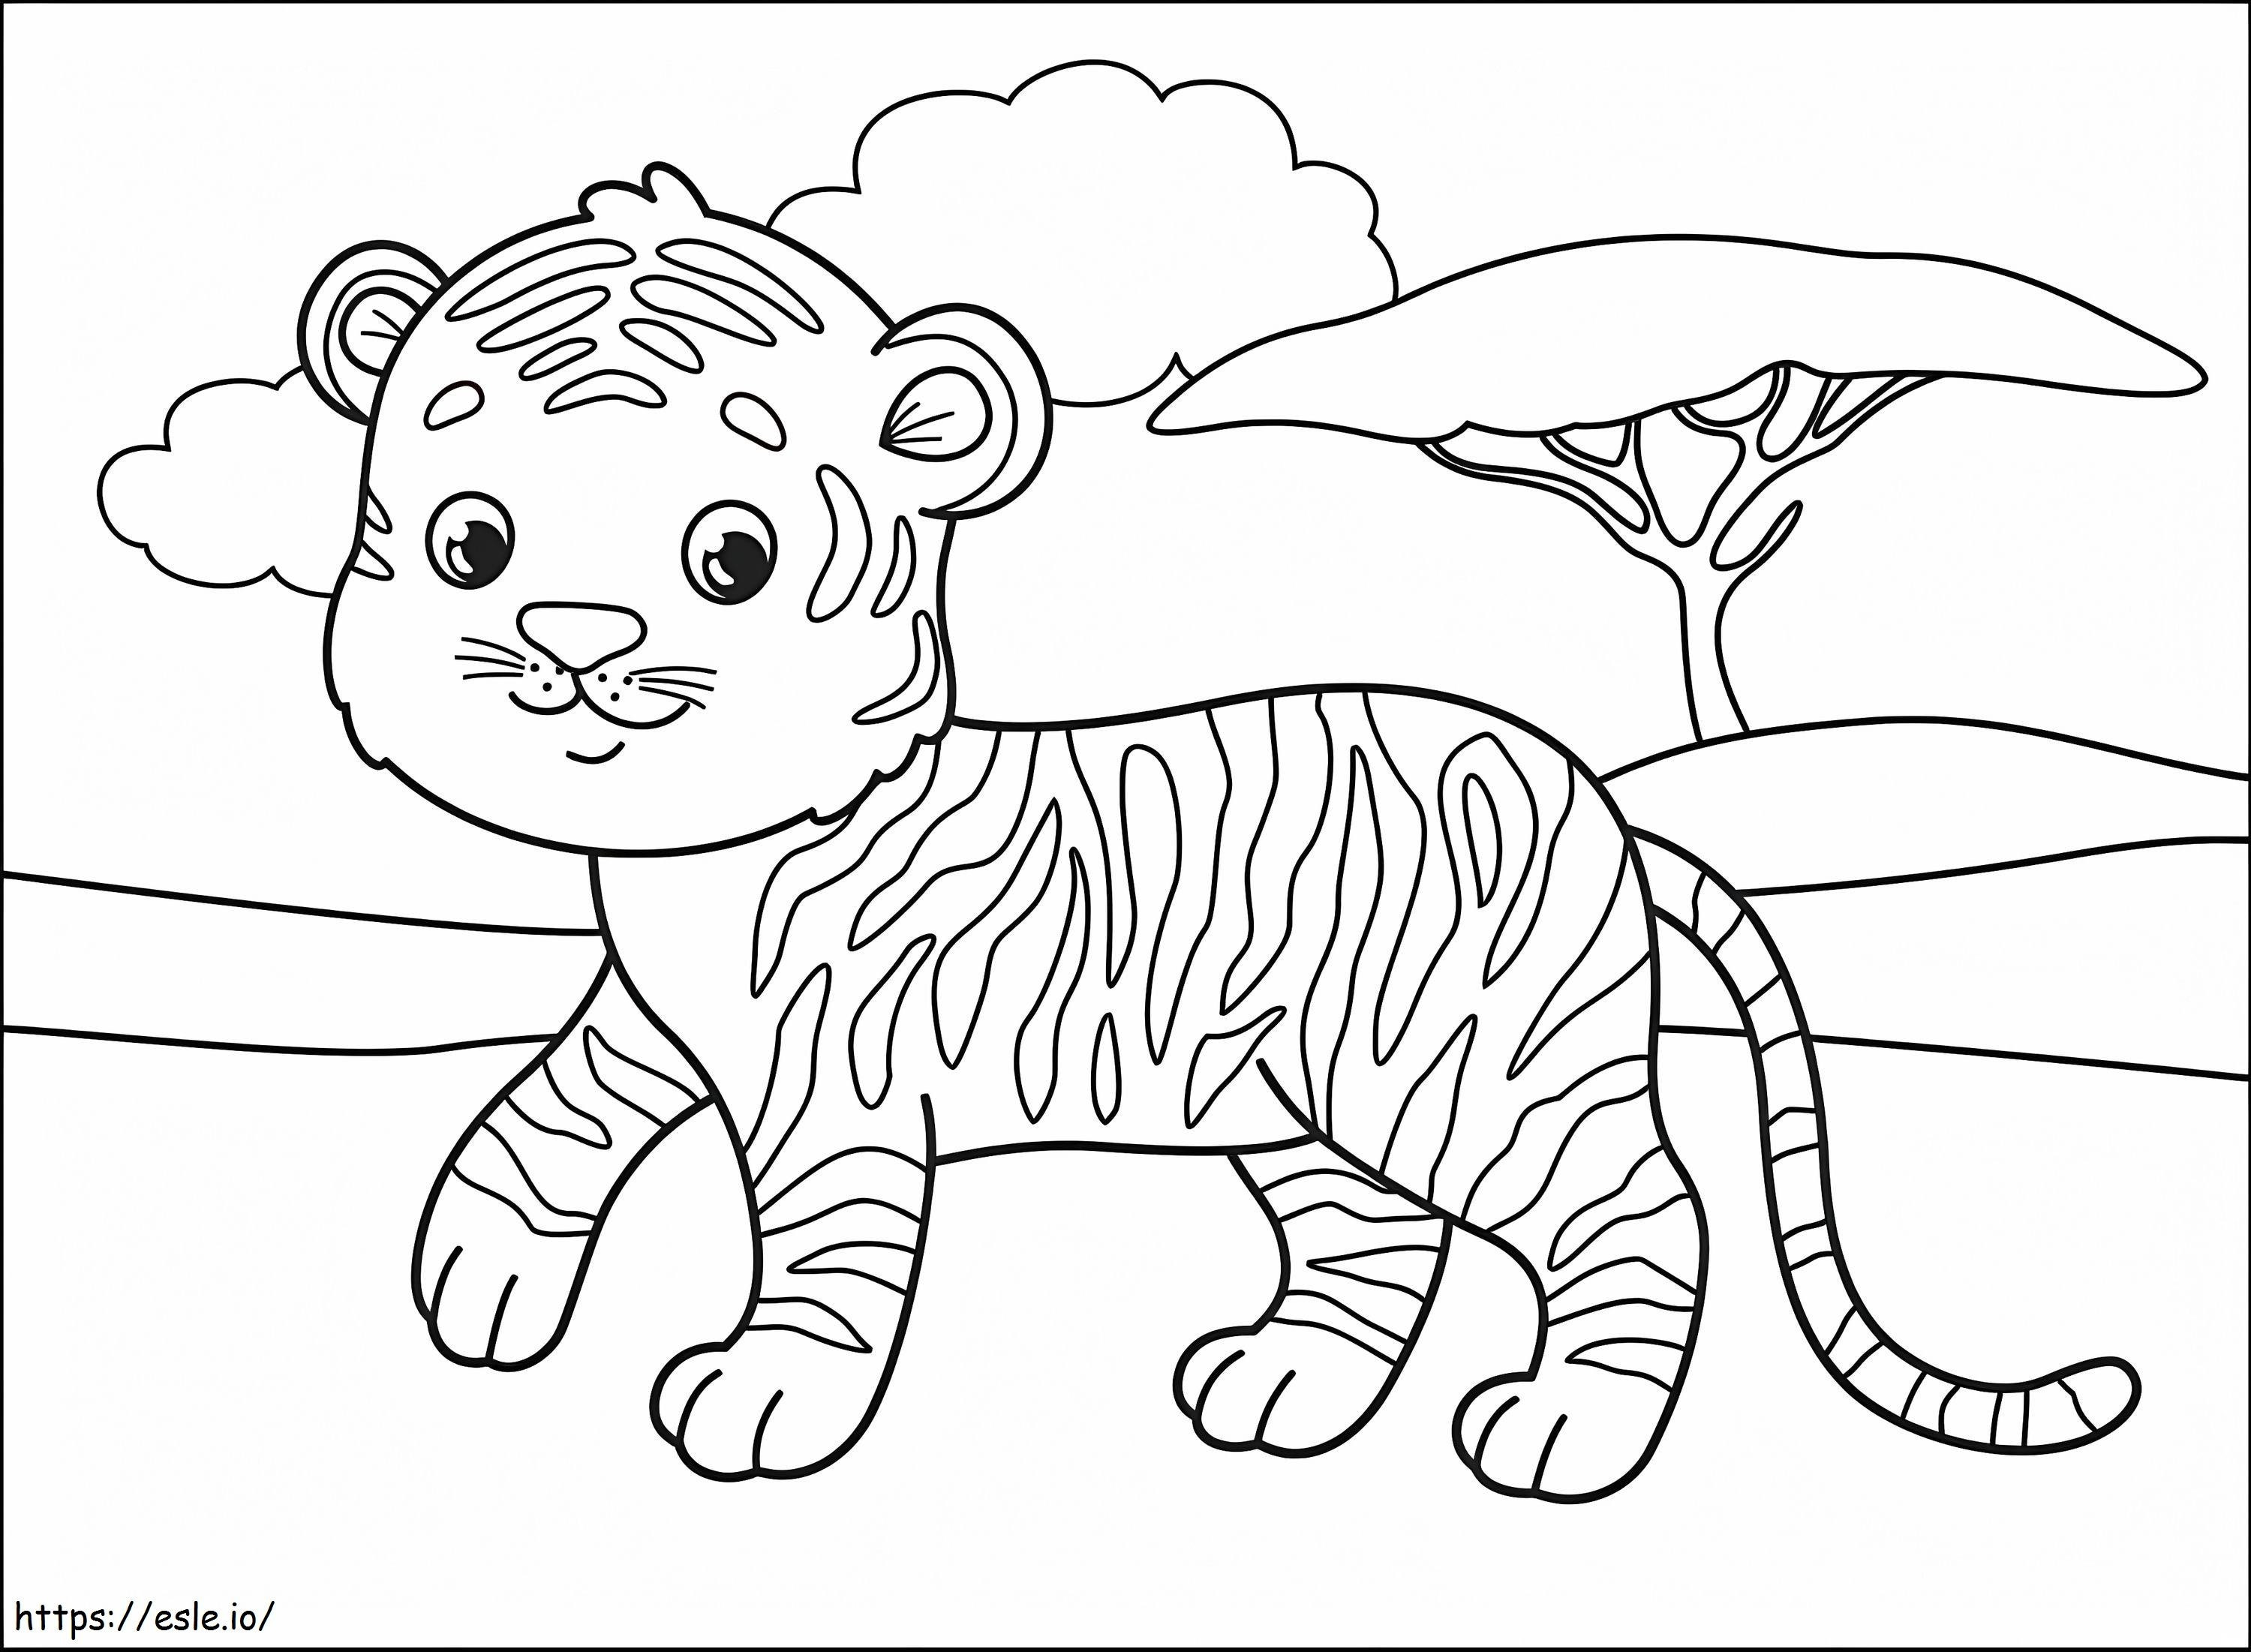 Adorable Tiger coloring page